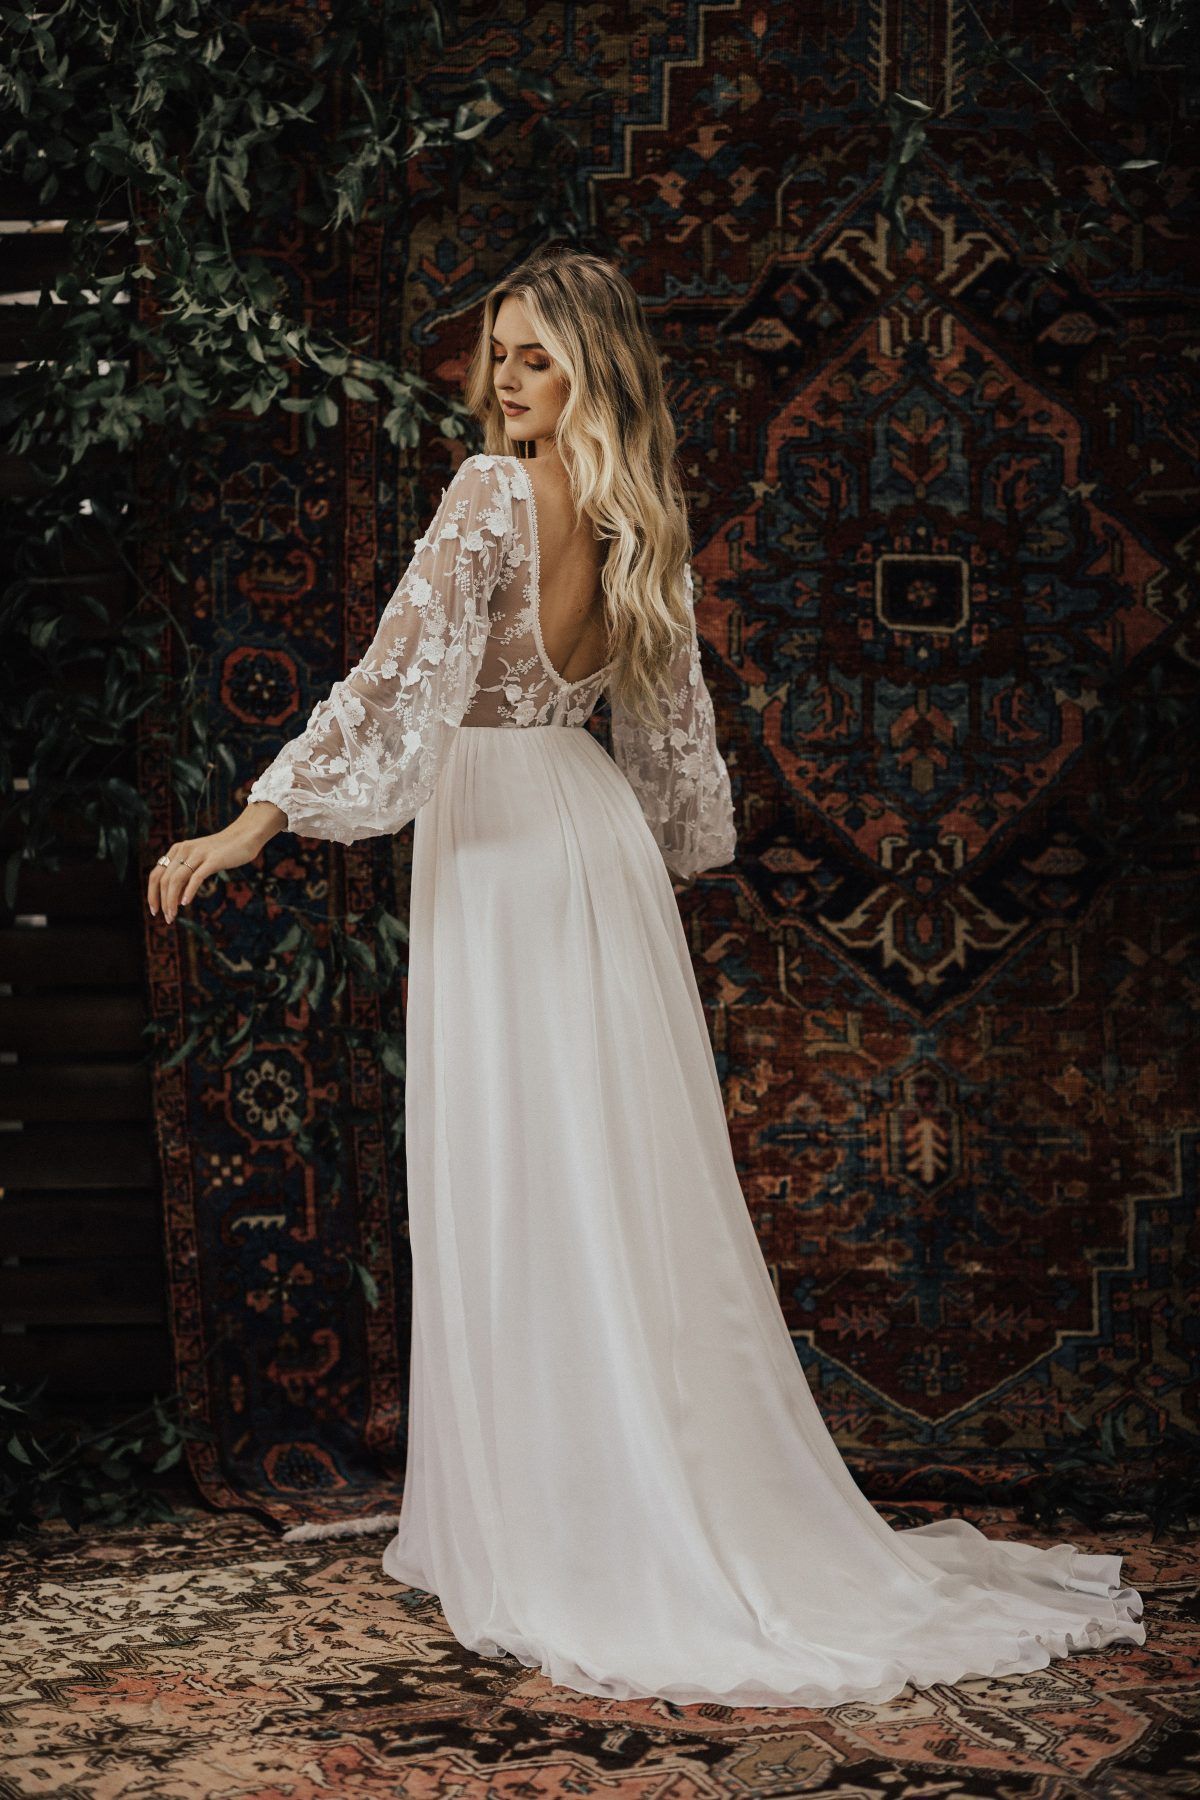 19 dress Wedding silk ideas